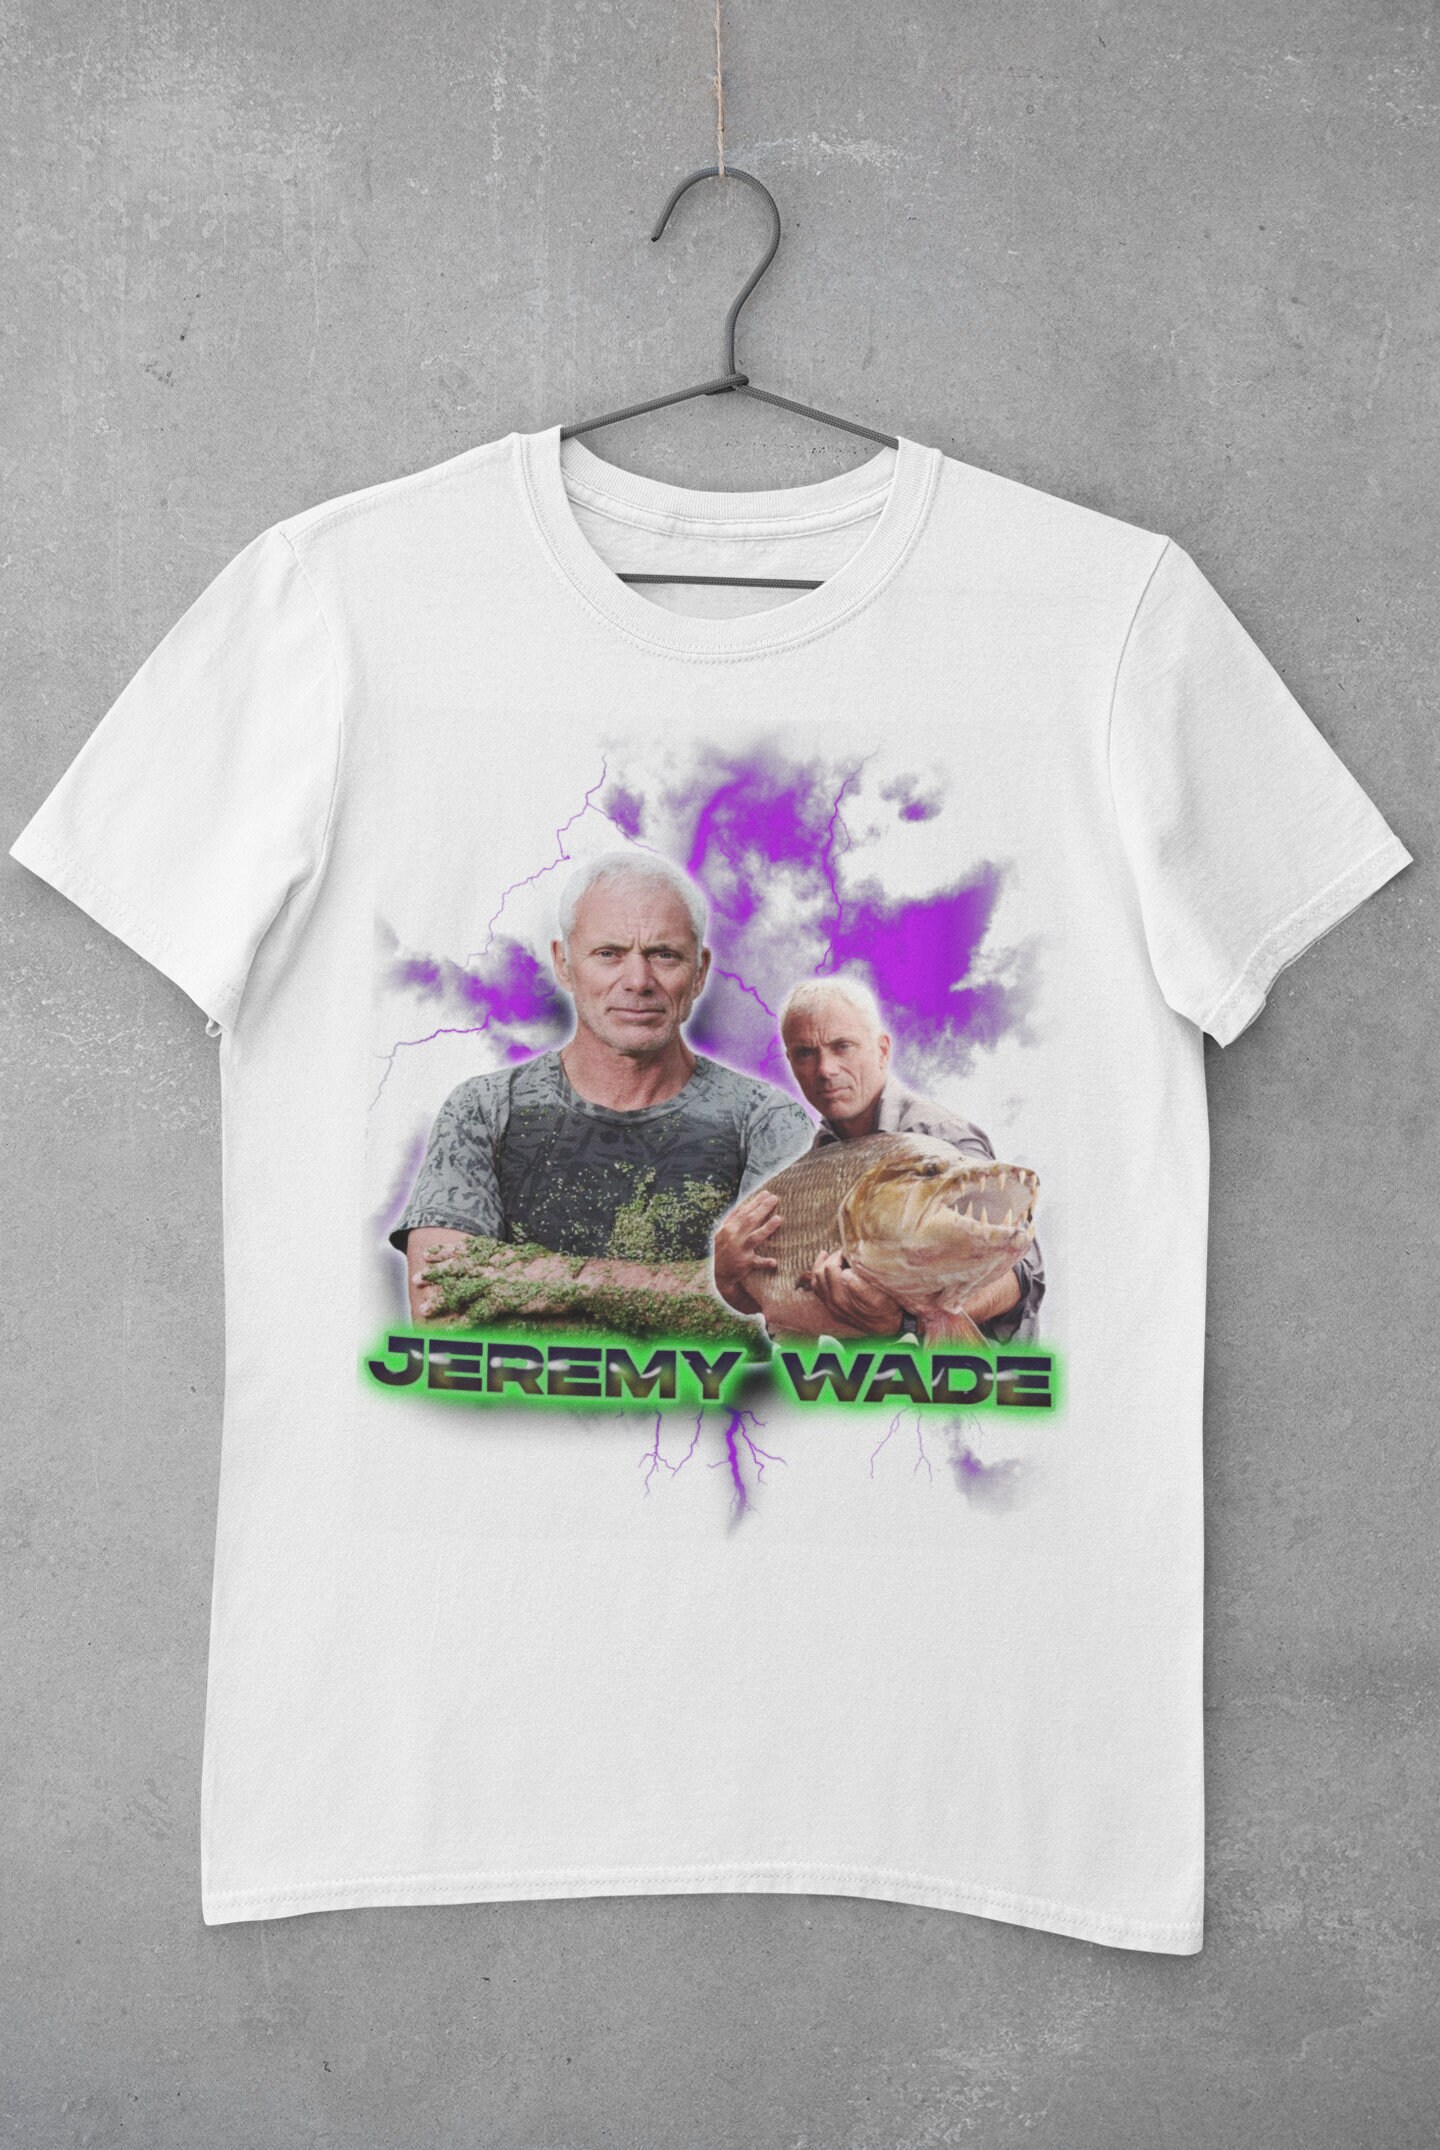 Buy Jeremy Wade Fishing T-shirt. Retro 90's Design. Jeremy Wade